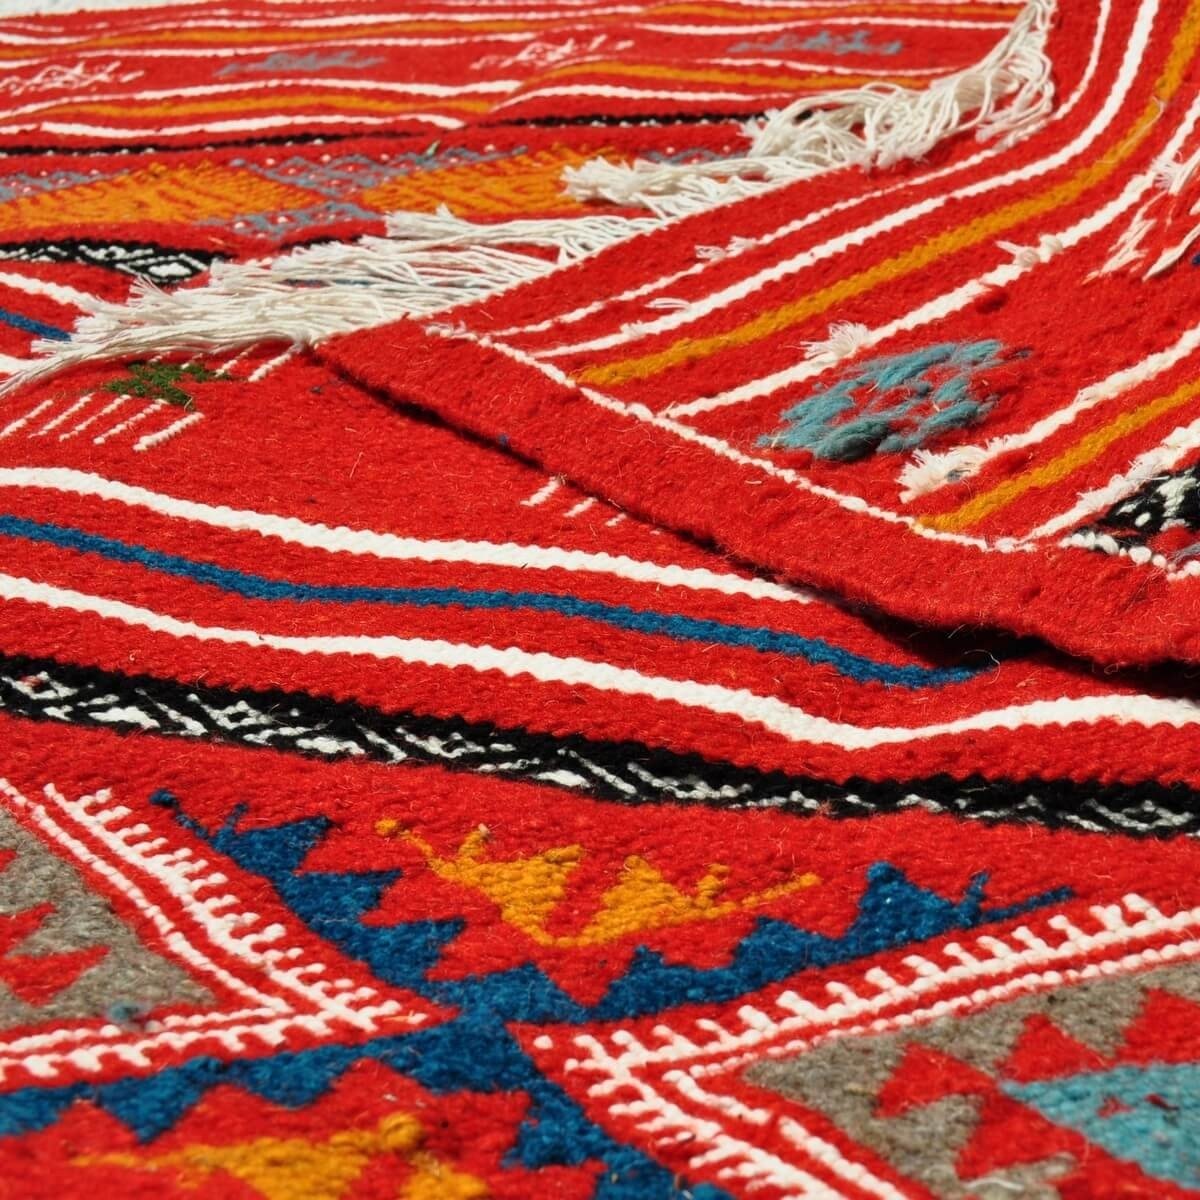 Berber tapijt Groot Tapijt Kilim Bir Salah 180x305 Rood (Handgeweven, Wol, Tunesië) Tunesisch kilimdeken, Marokkaanse stijl. Rec